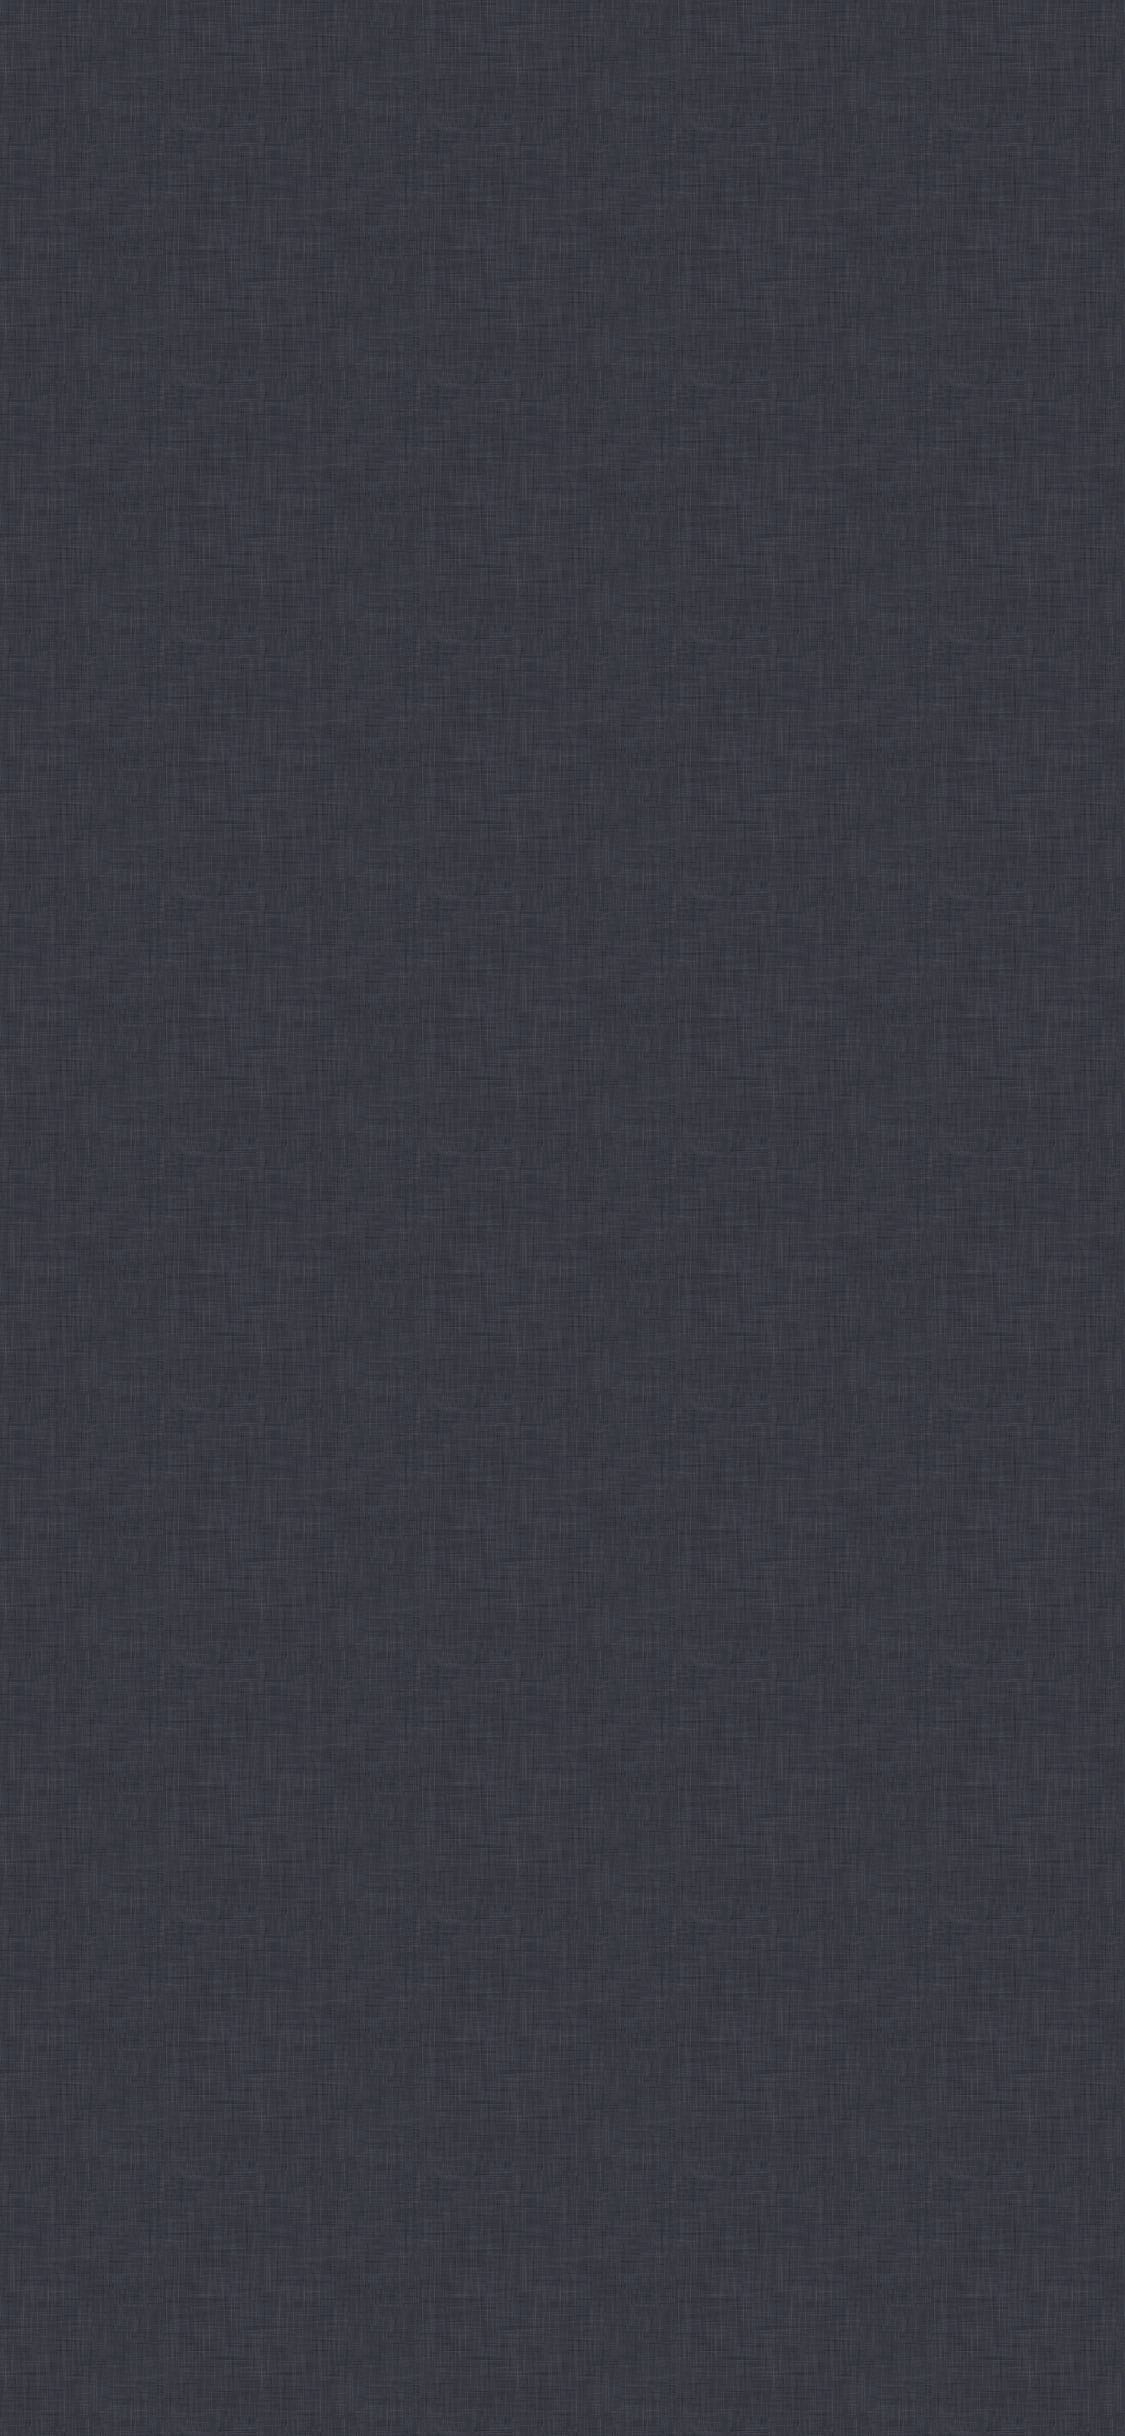 Dark Grey Iphone Wallpapers Top Free Dark Grey Iphone Backgrounds Wallpaperaccess